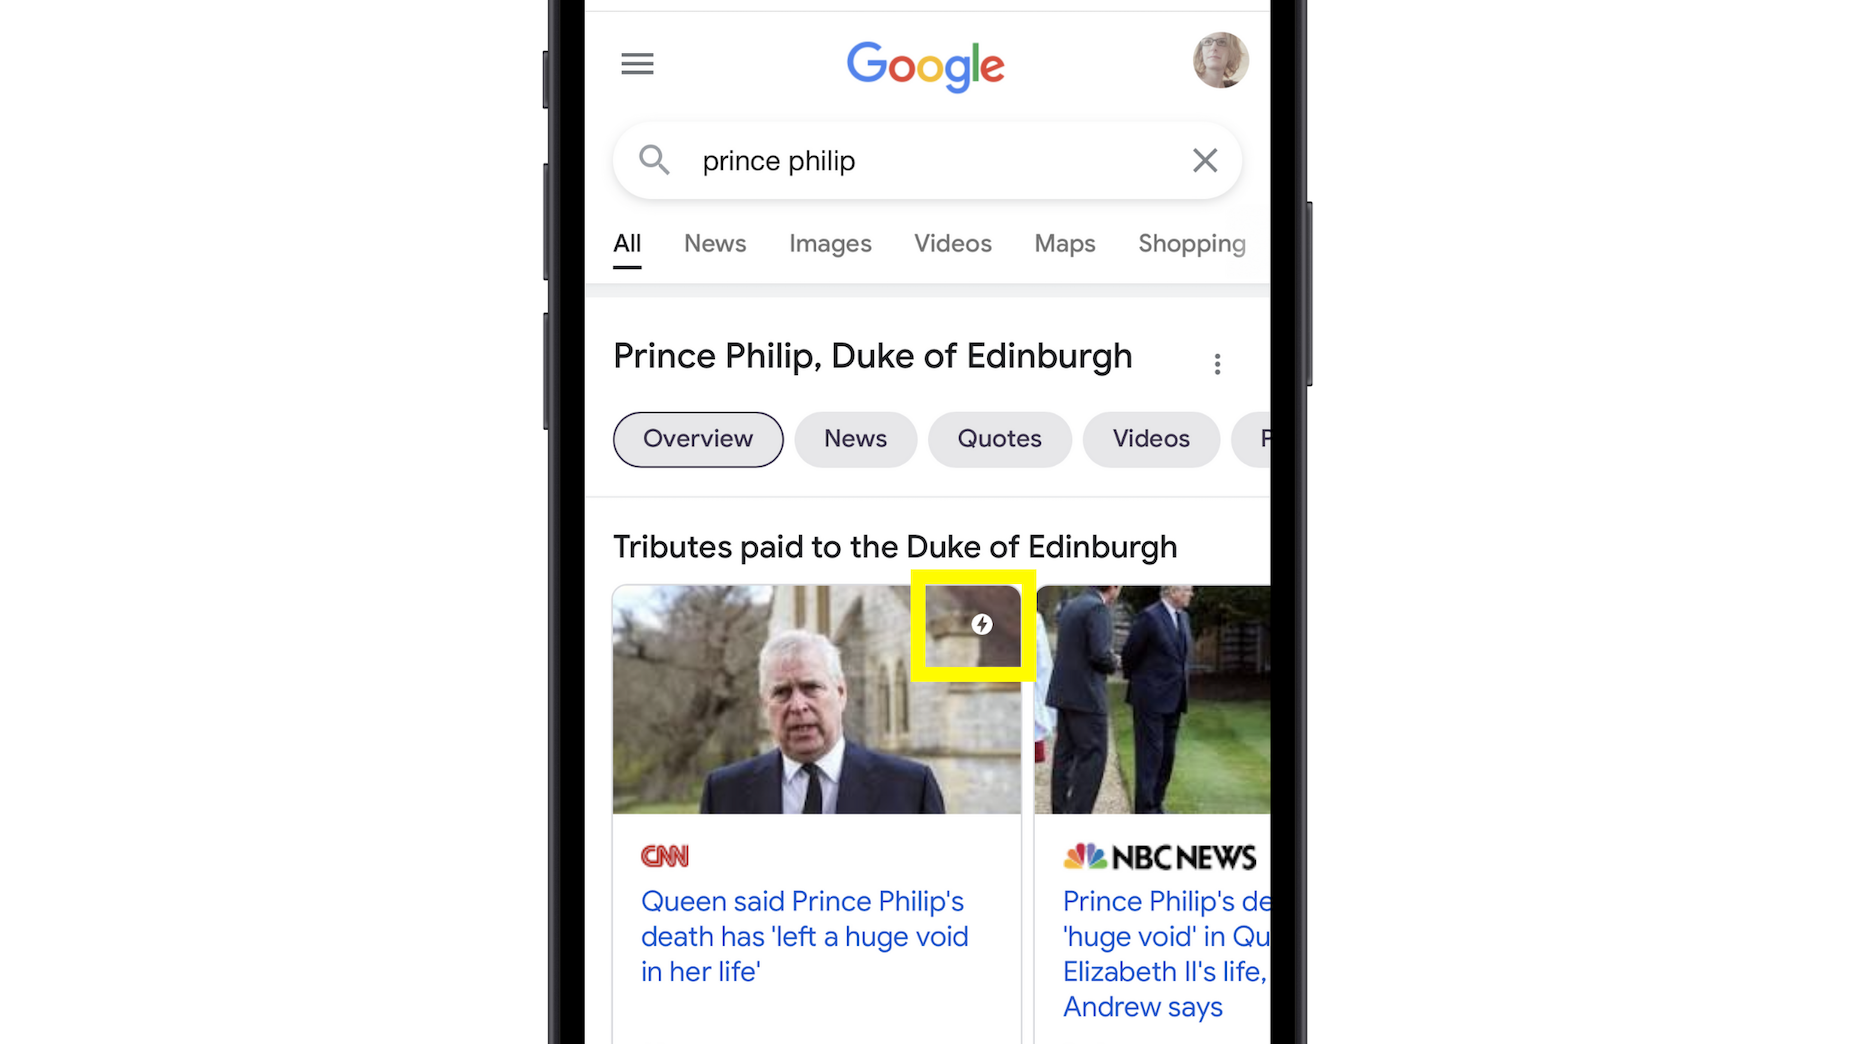 Google Top Stories en iPhone con Prince Philip Search